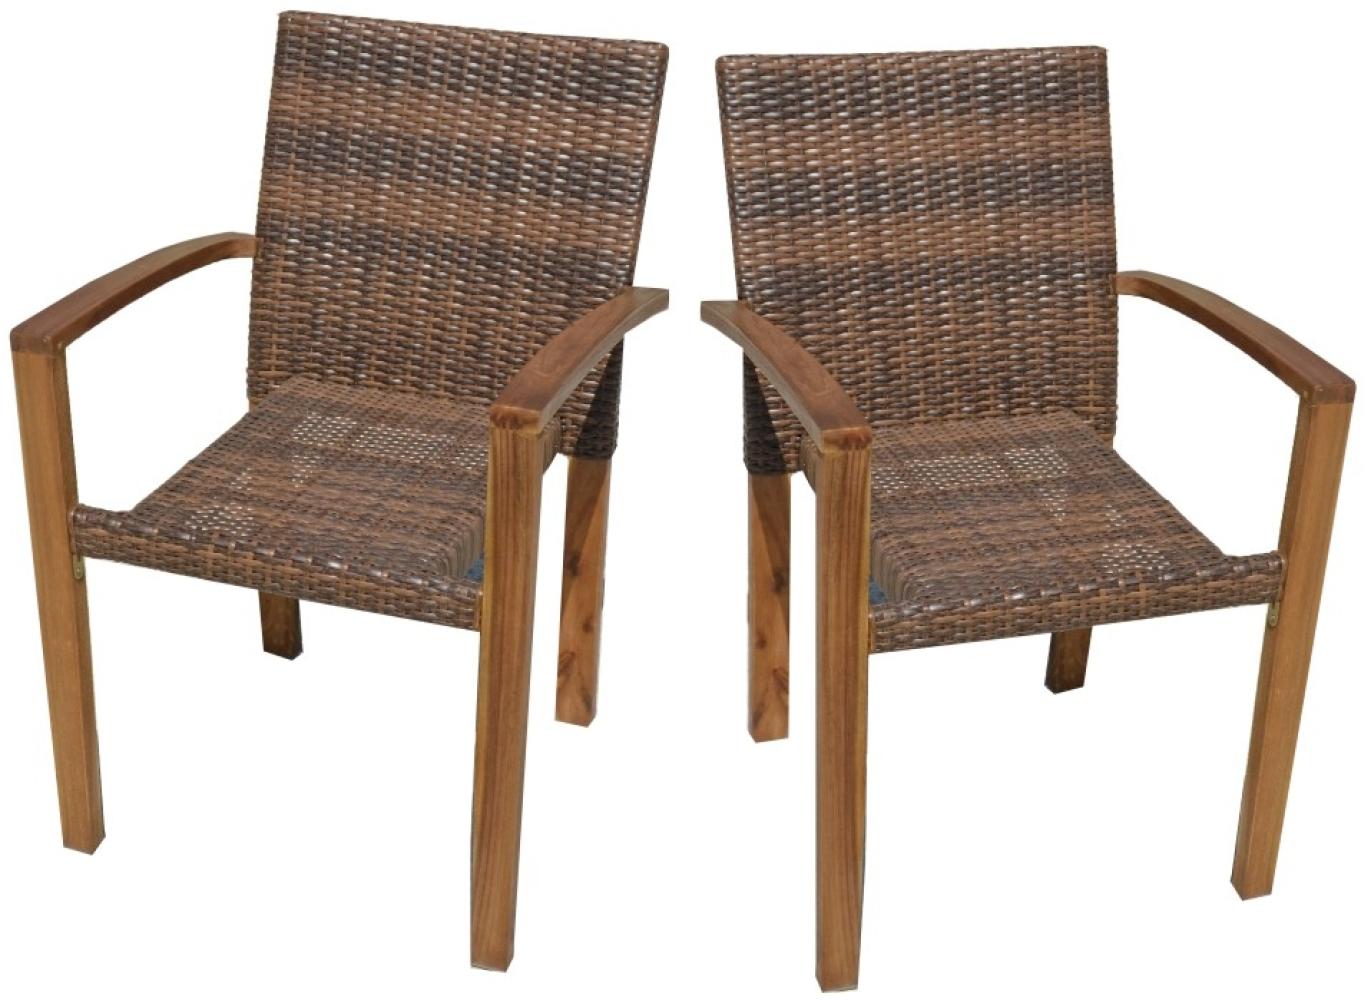 2x Stapelstuhl Gartenstuhl Garten Stühle Stuhl Akazie Holz Rattan Optik Möbel Bild 1